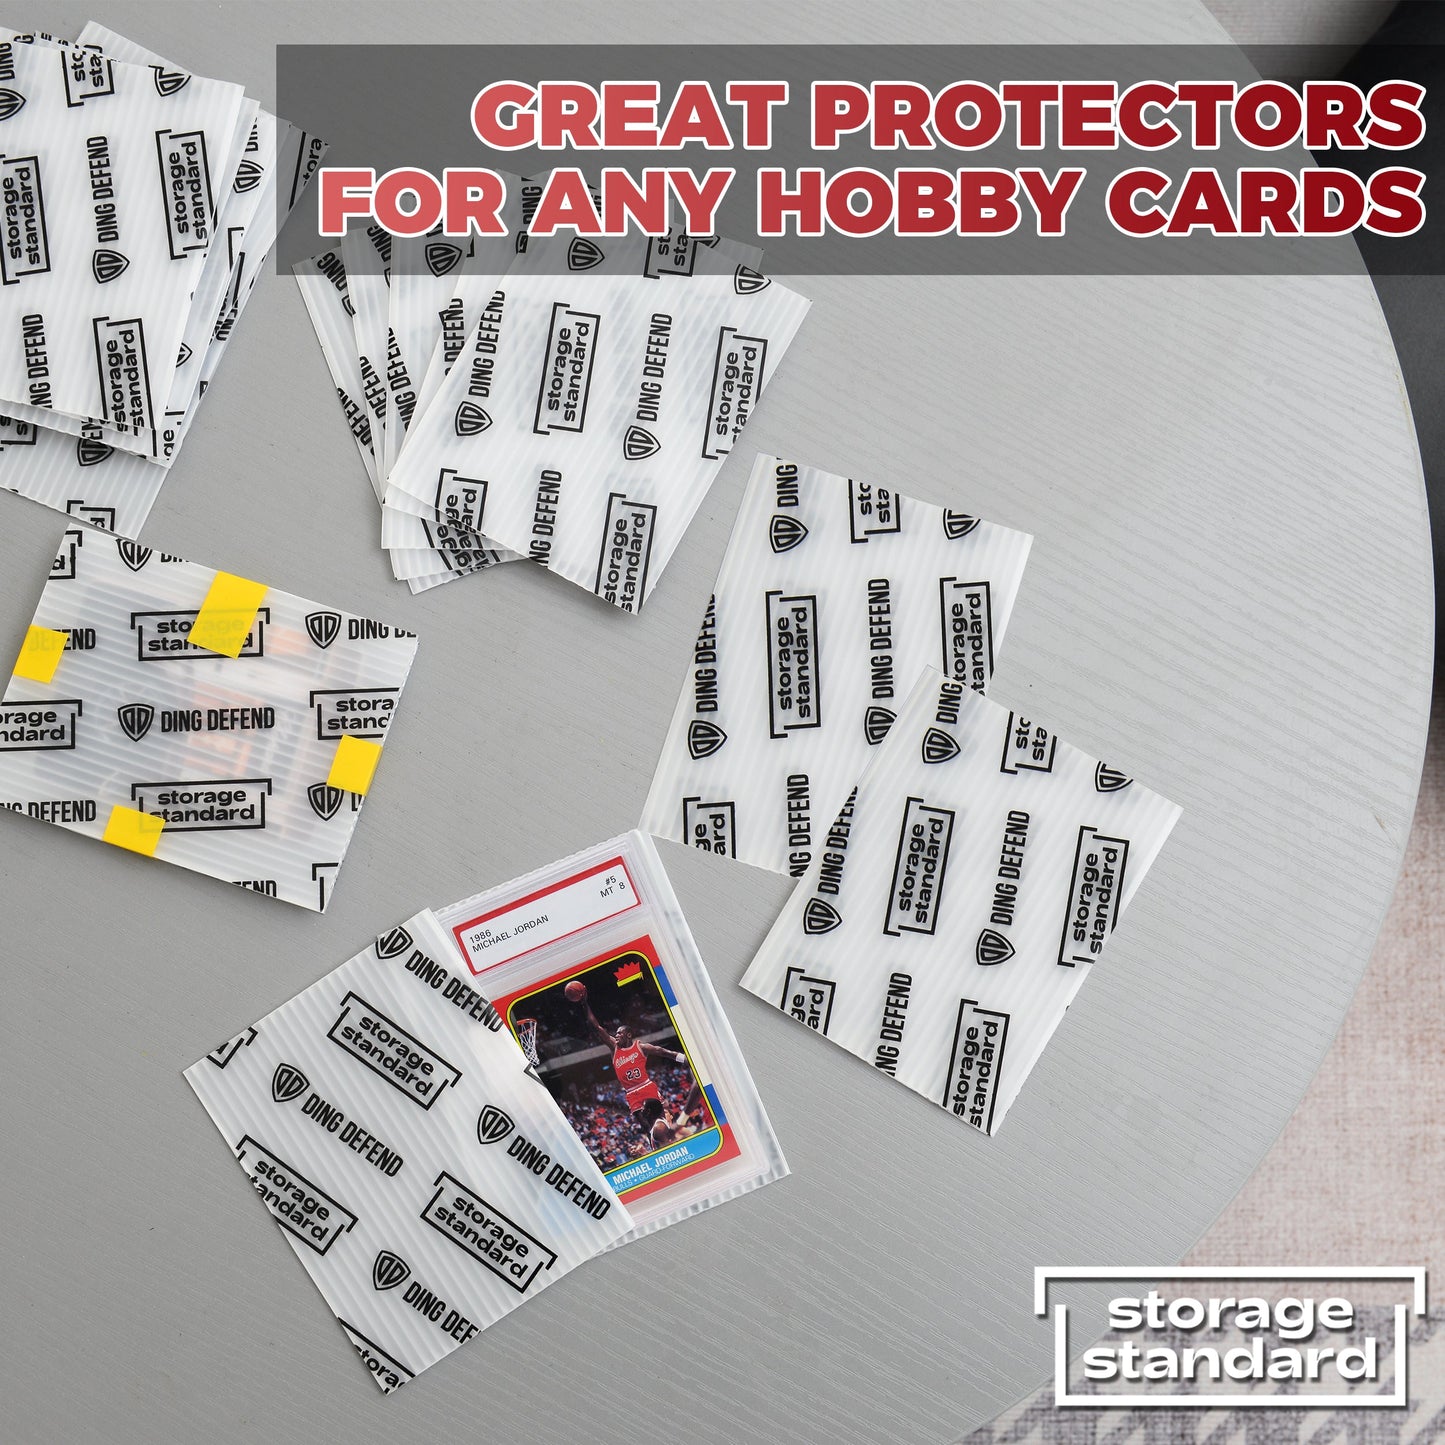 Trading Card Shipping Protectors, 4'' x 6''